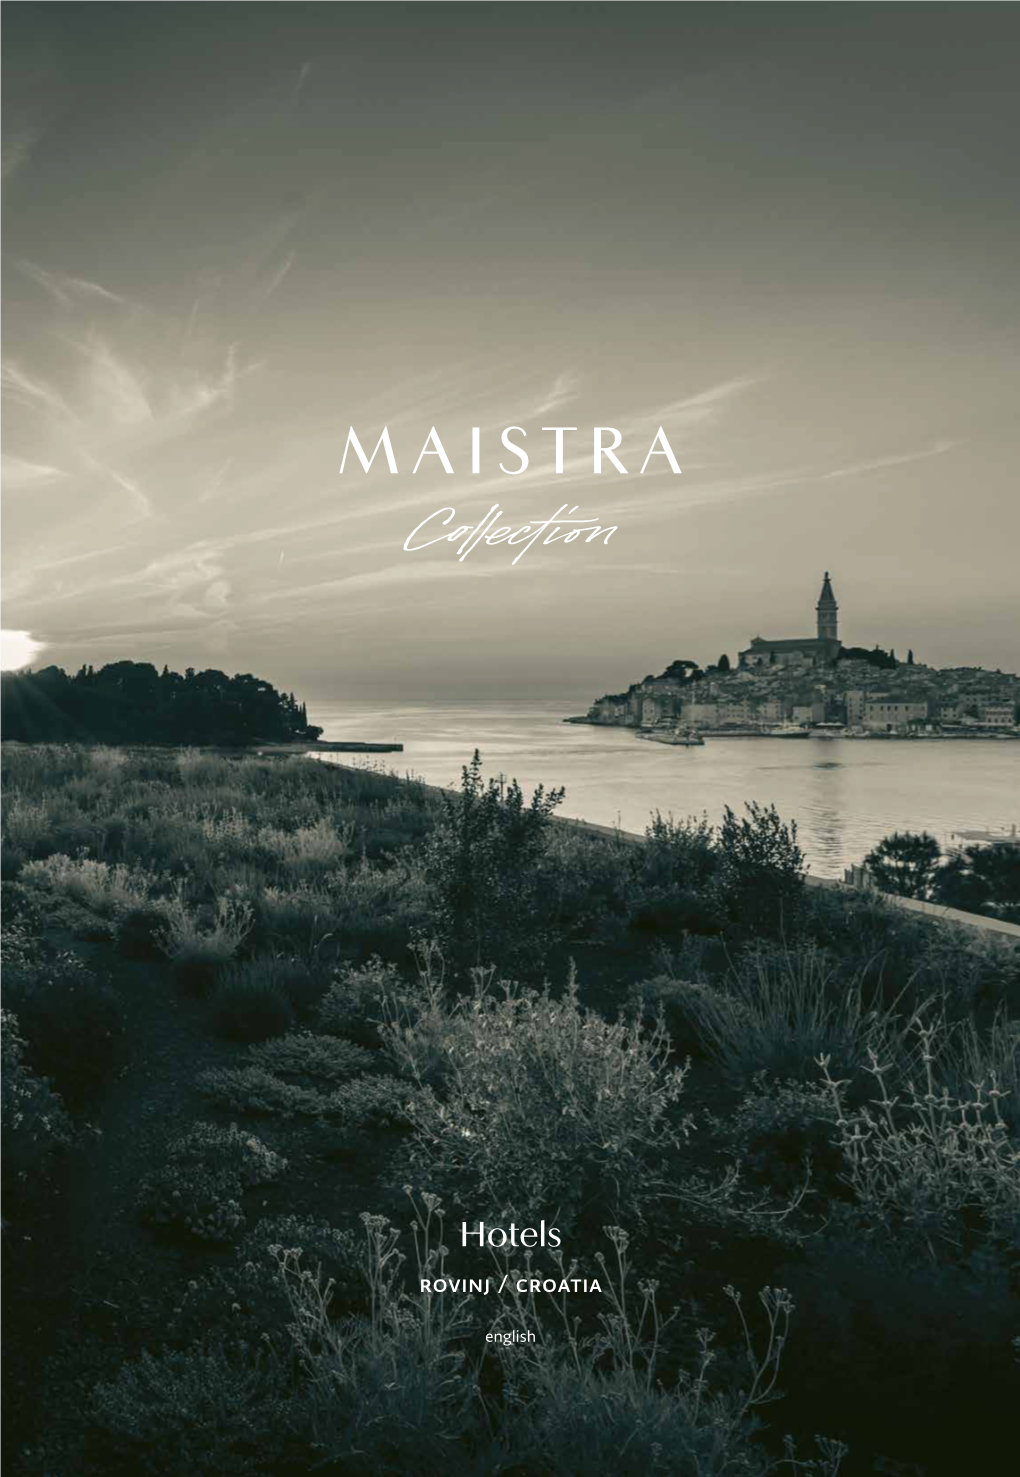 Maistra-201910-16558-Collection-Brosura 290X420-Web-Spreads.Pdf